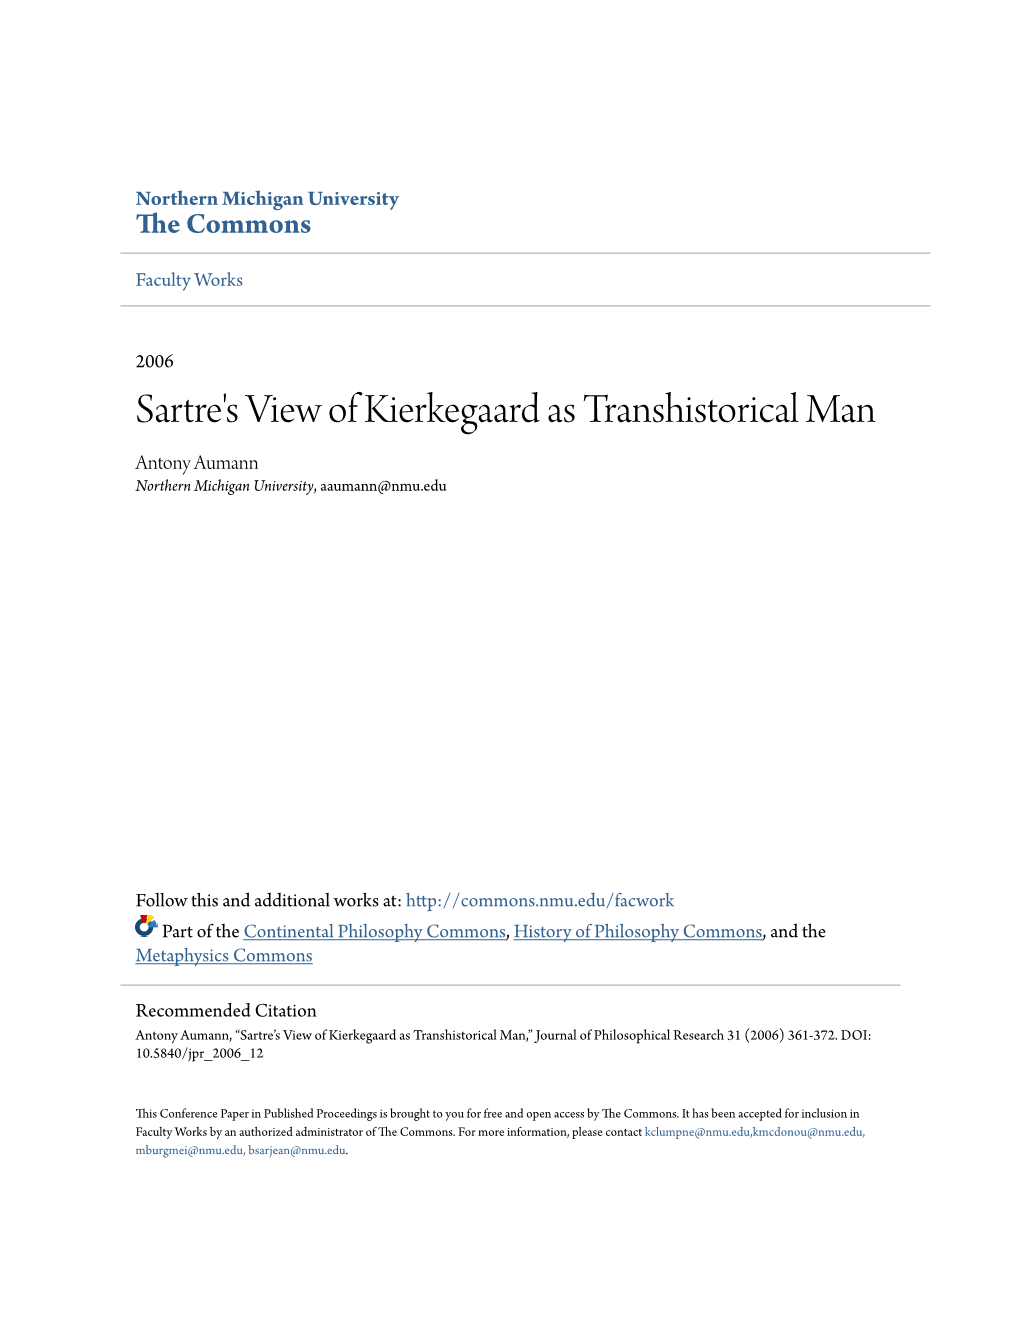 Sartre's View of Kierkegaard As Transhistorical Man Antony Aumann Northern Michigan University, Aaumann@Nmu.Edu